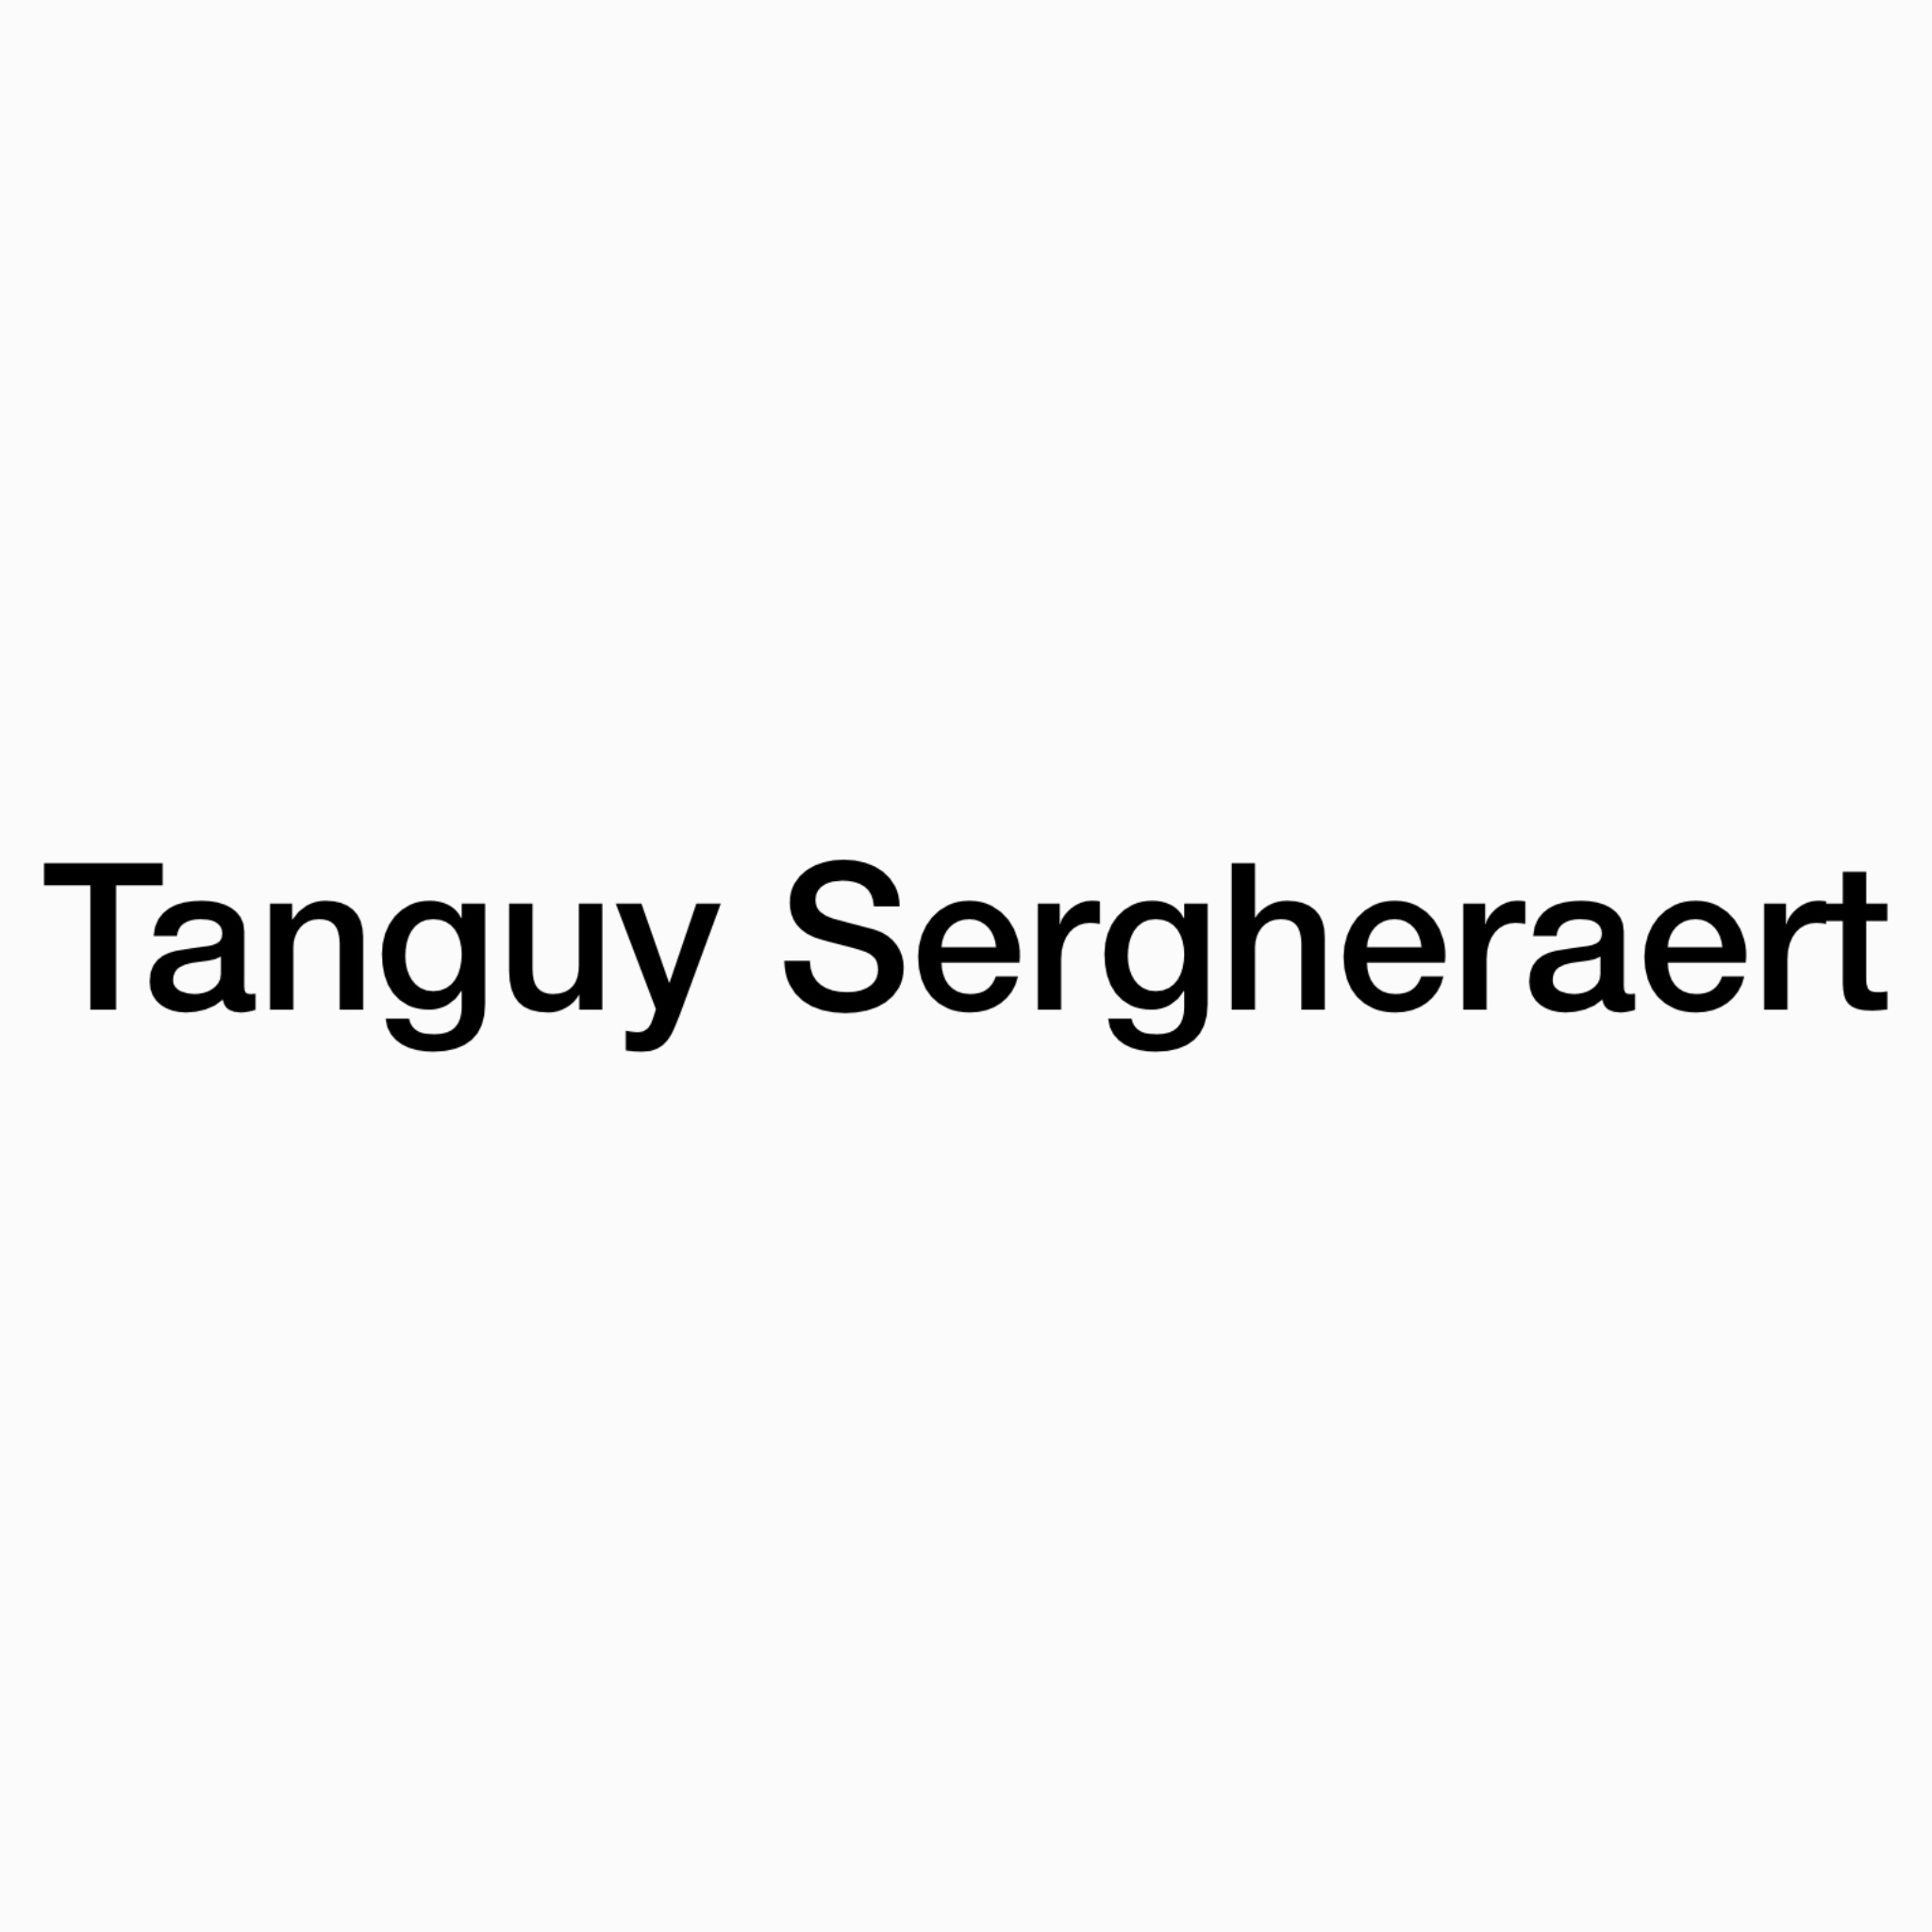 Tanguy Sergheraert